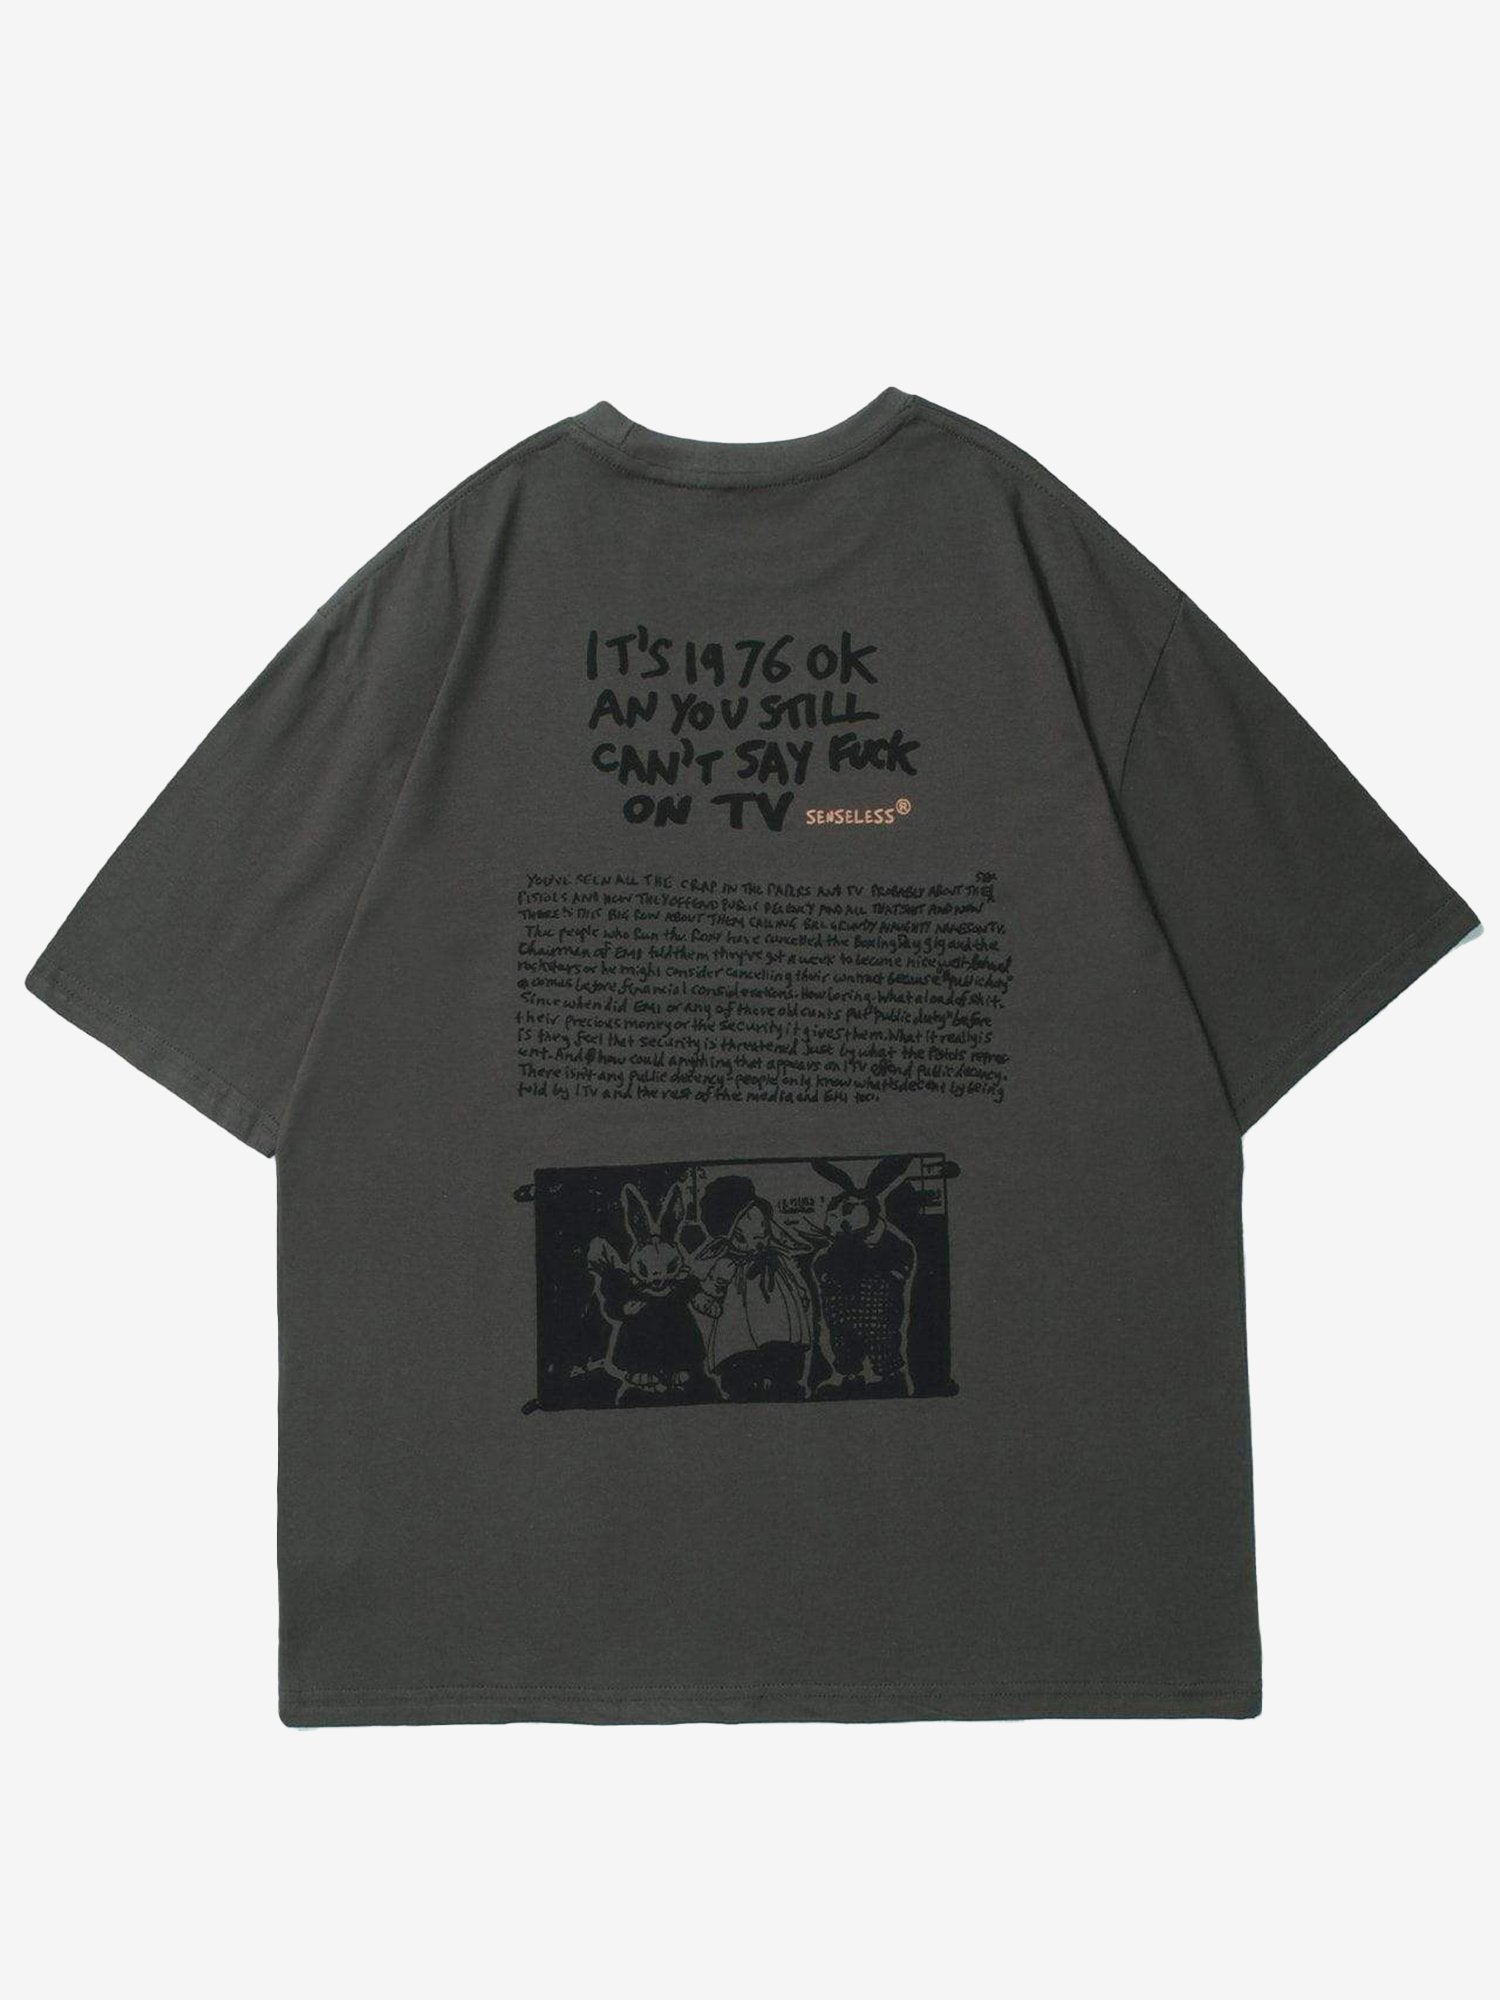 JUSTNOTAG Fun Animal Print Cotton T-shirts